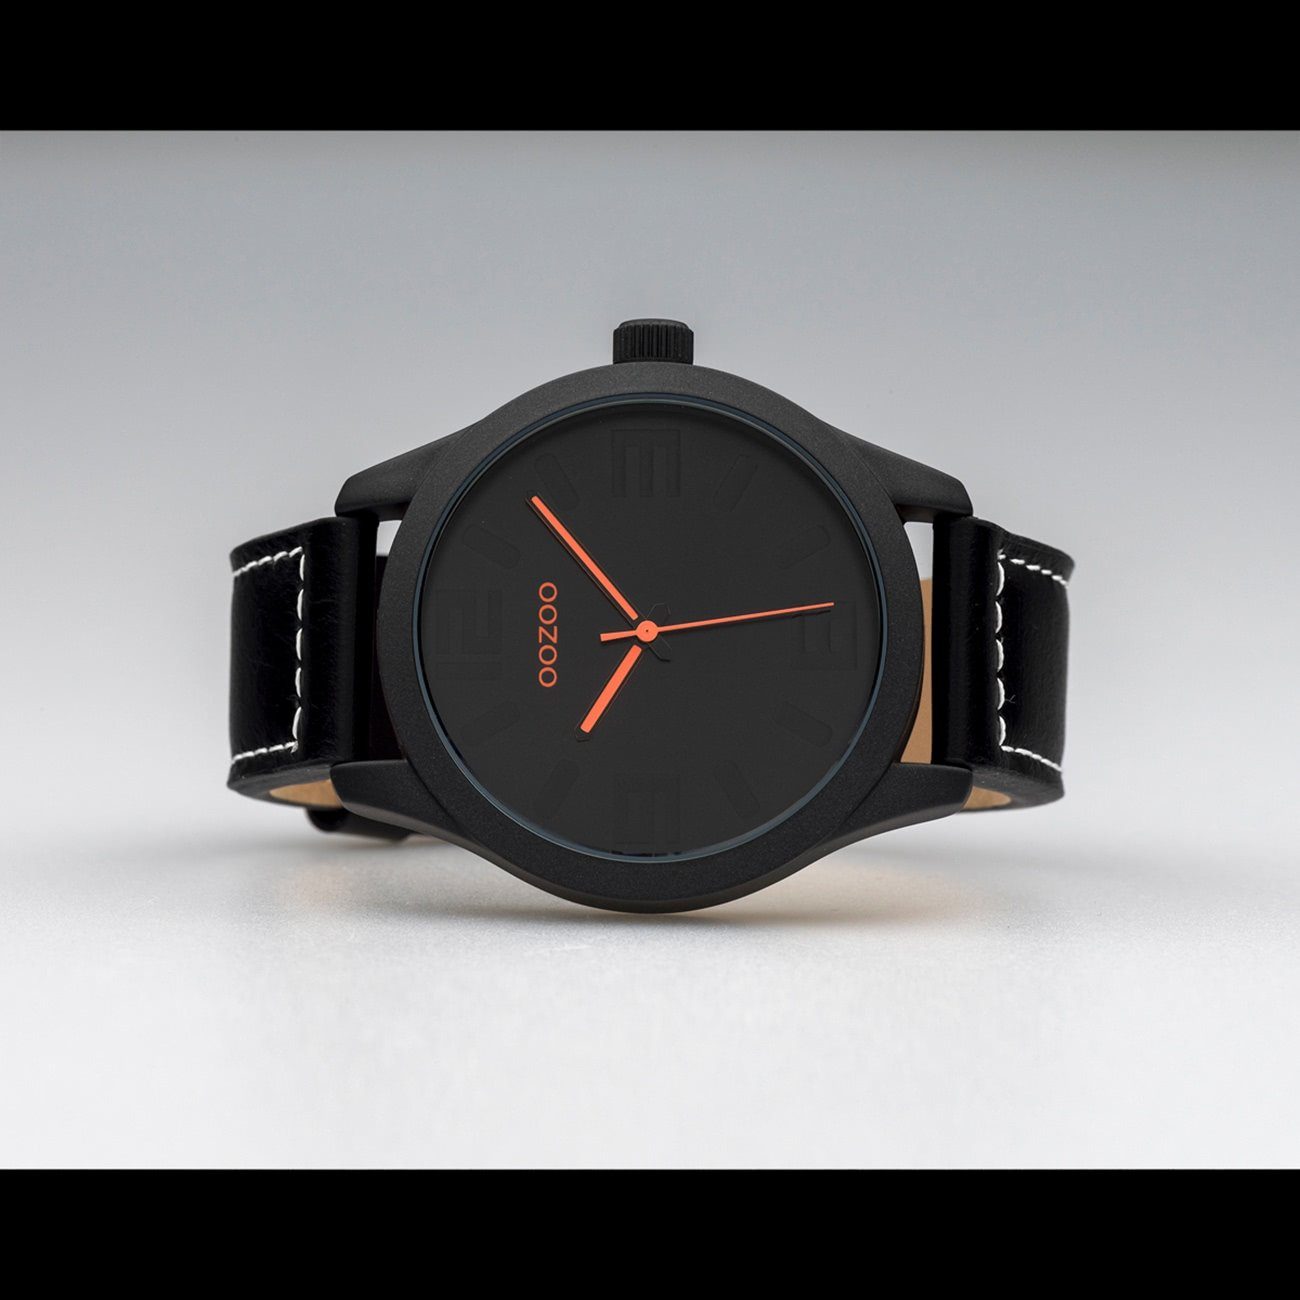 rund, OOZOO Herren groß Quarzuhr Analog, Lederarmband, (ca. Herrenuhr schwarz Oozoo Fashion-Style 46mm) extra Armbanduhr